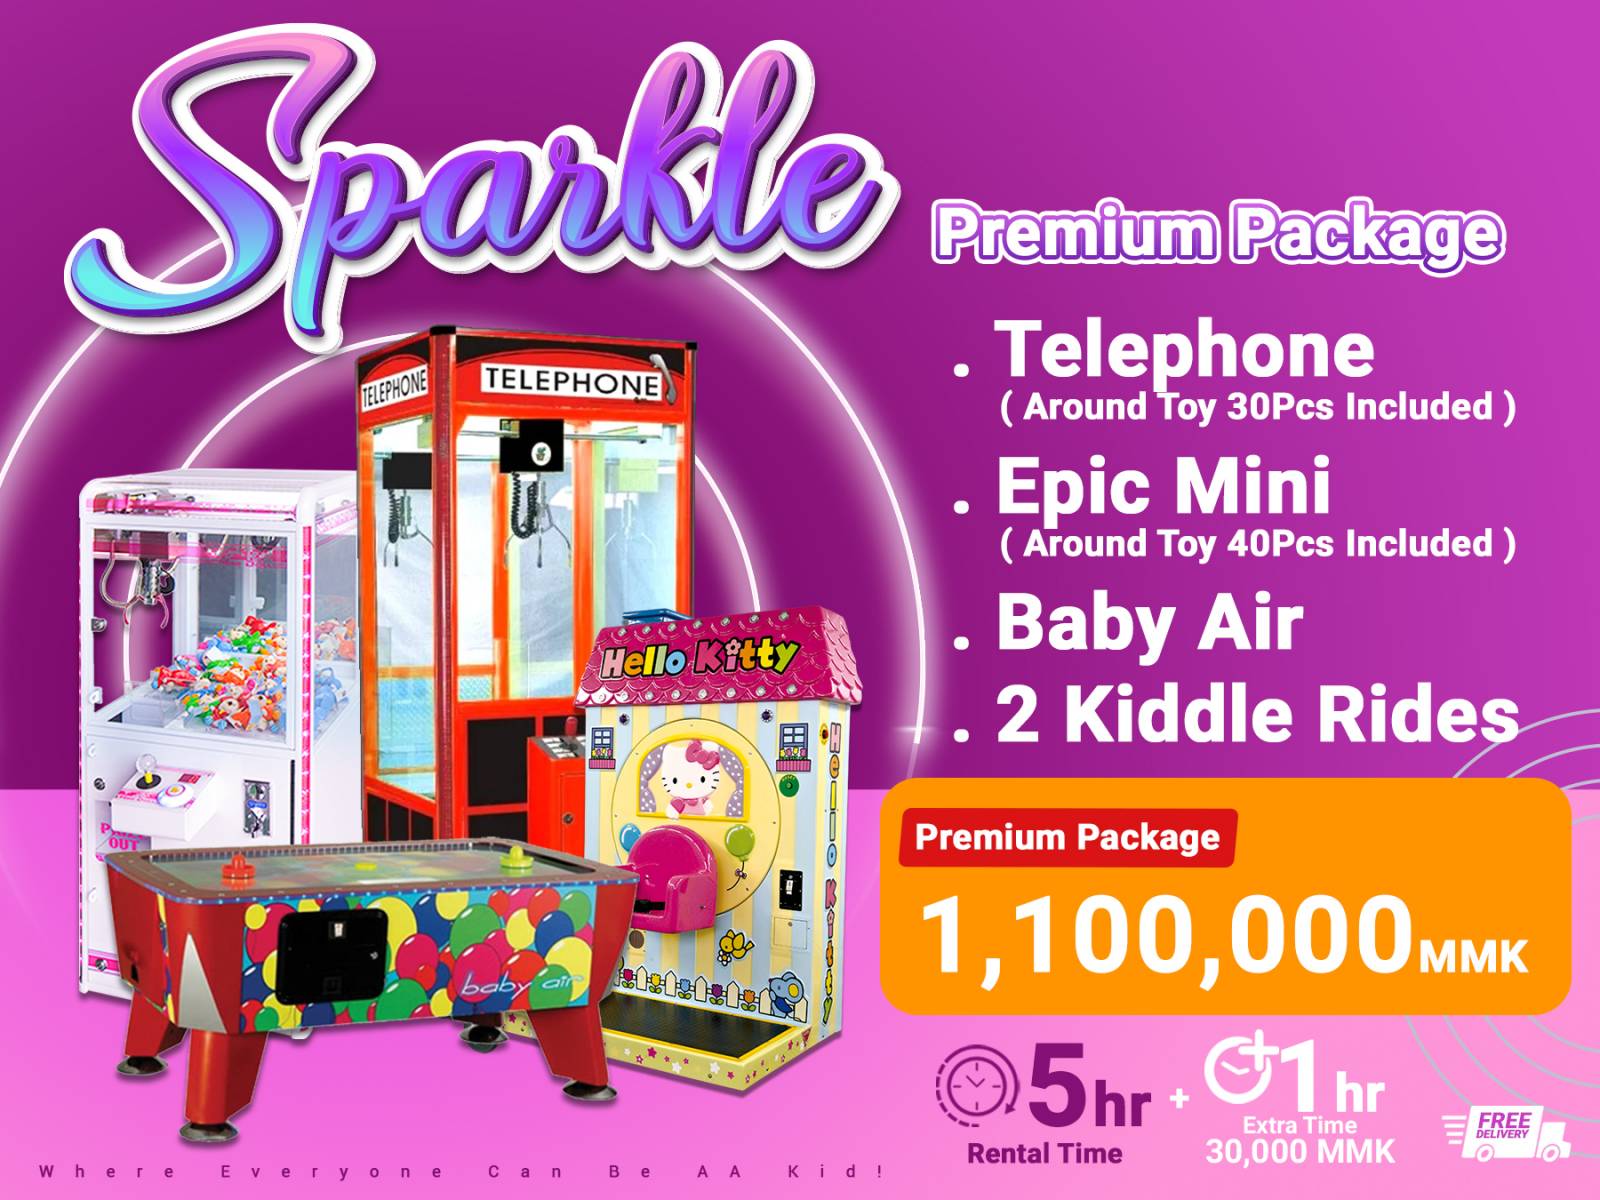 Sparkle Package (Premium)